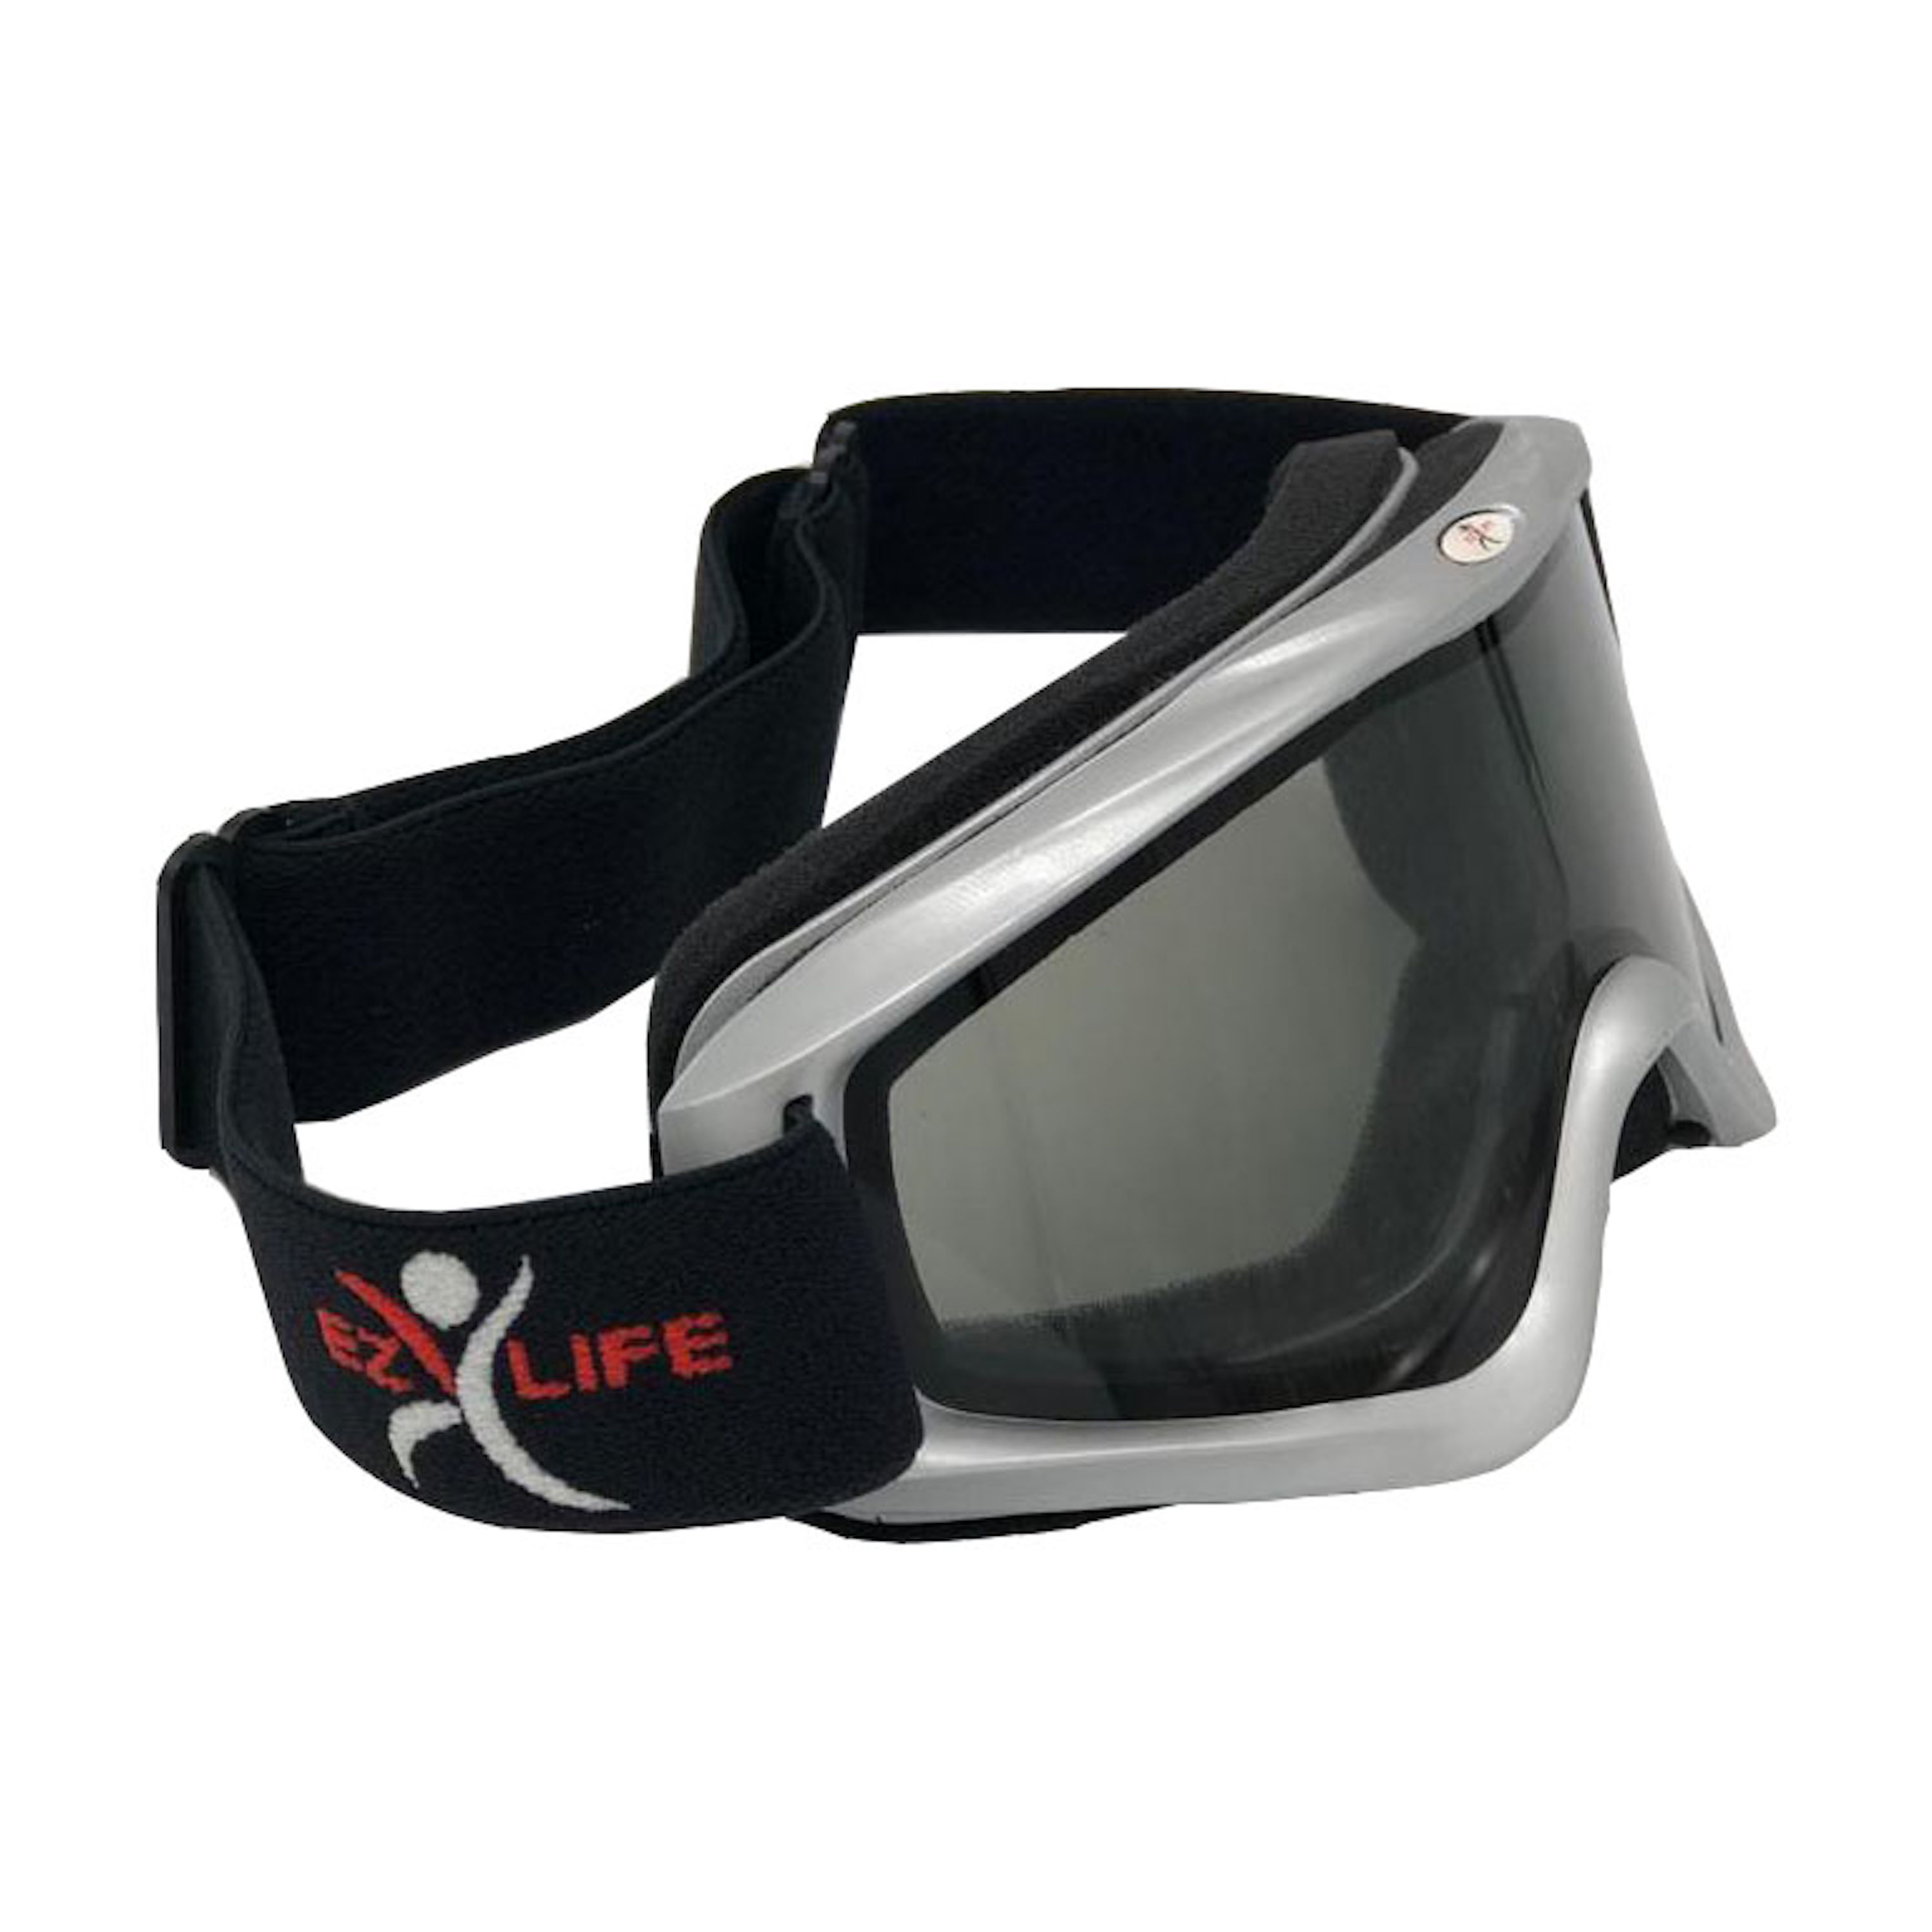 Kids Ski Goggles-Snowboarding Sports Goggles Glasses - for Youth & Kids - Anti-Fog (Smoke) - image 2 of 12